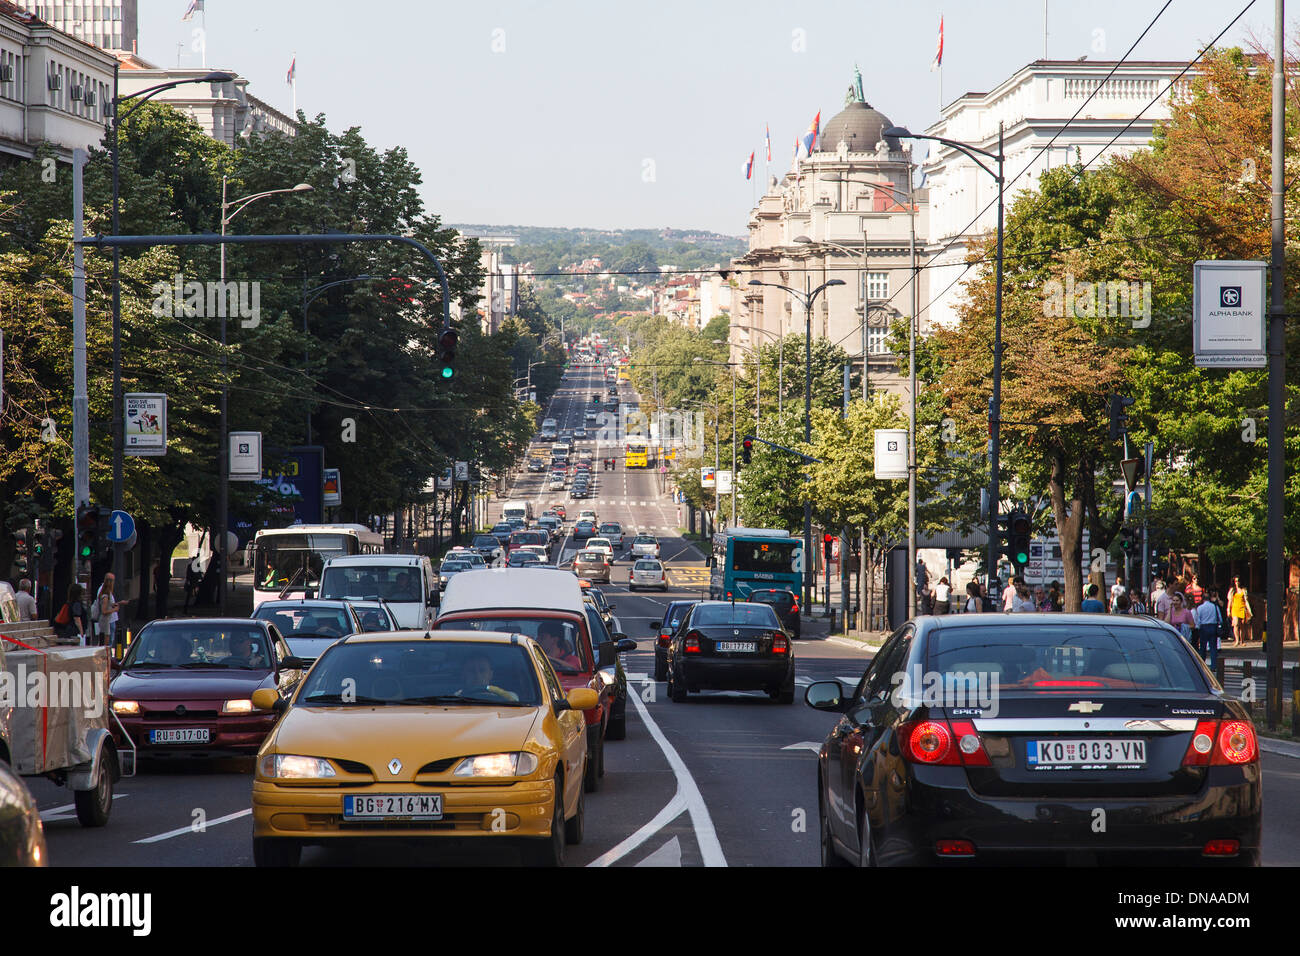 Cars in the street, Belgrade, Serbia Stock Photo